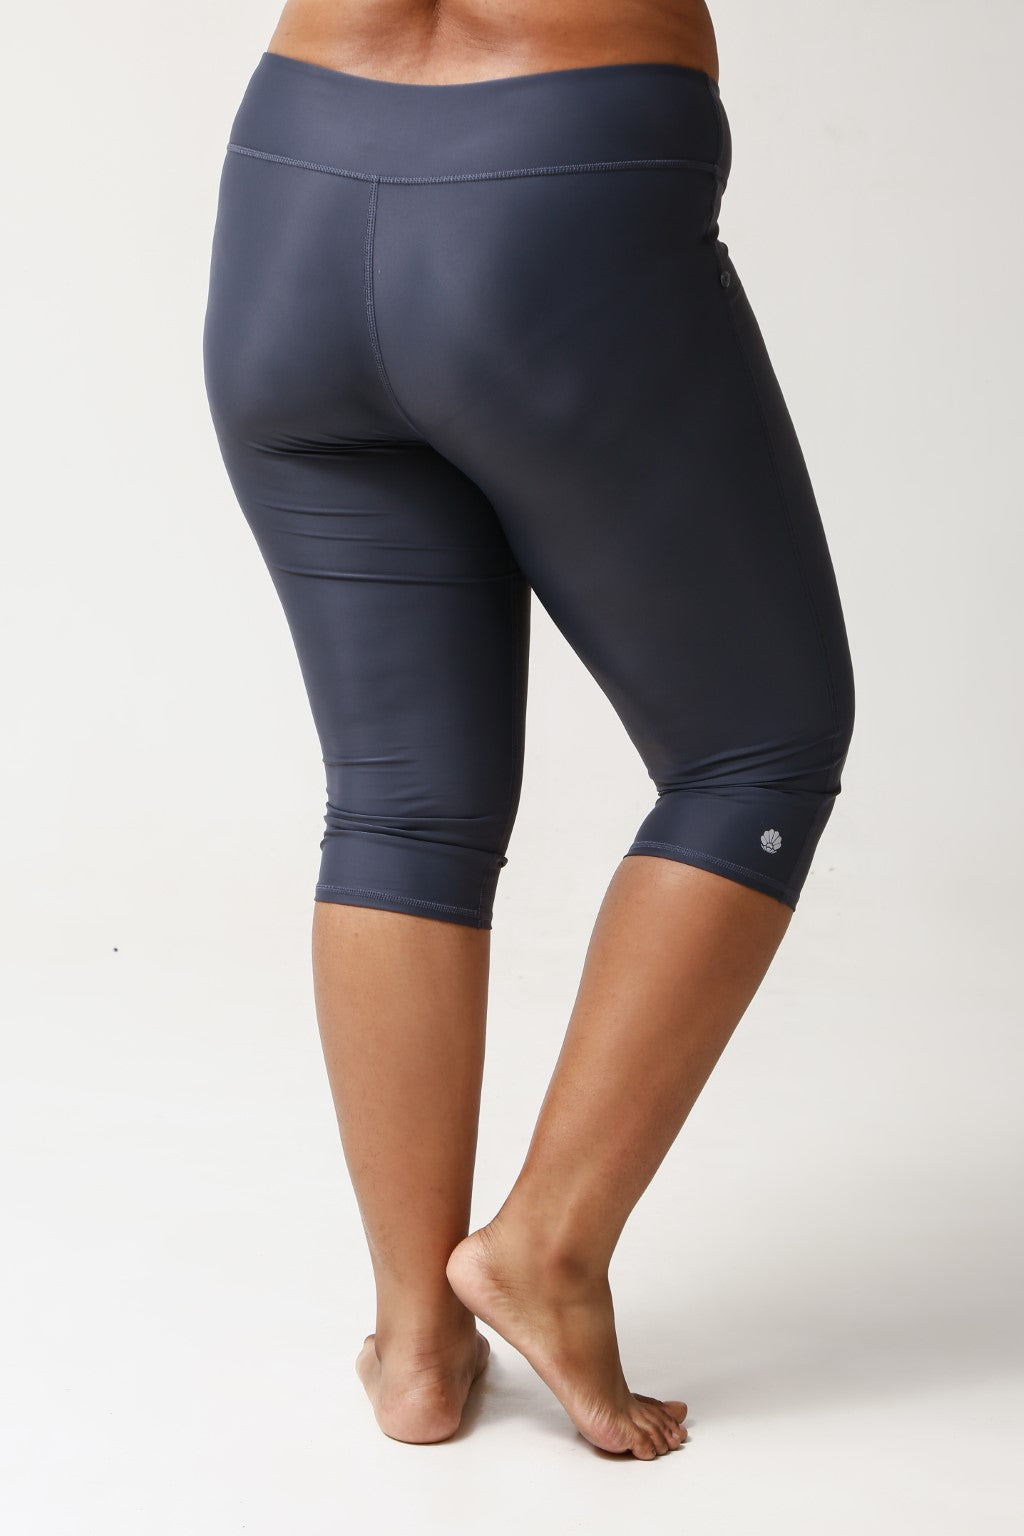 Lanuuk Capri Swim Tights - Shadow | Cropped Shorts Swimming Leggings Modest Swimwear Burkini